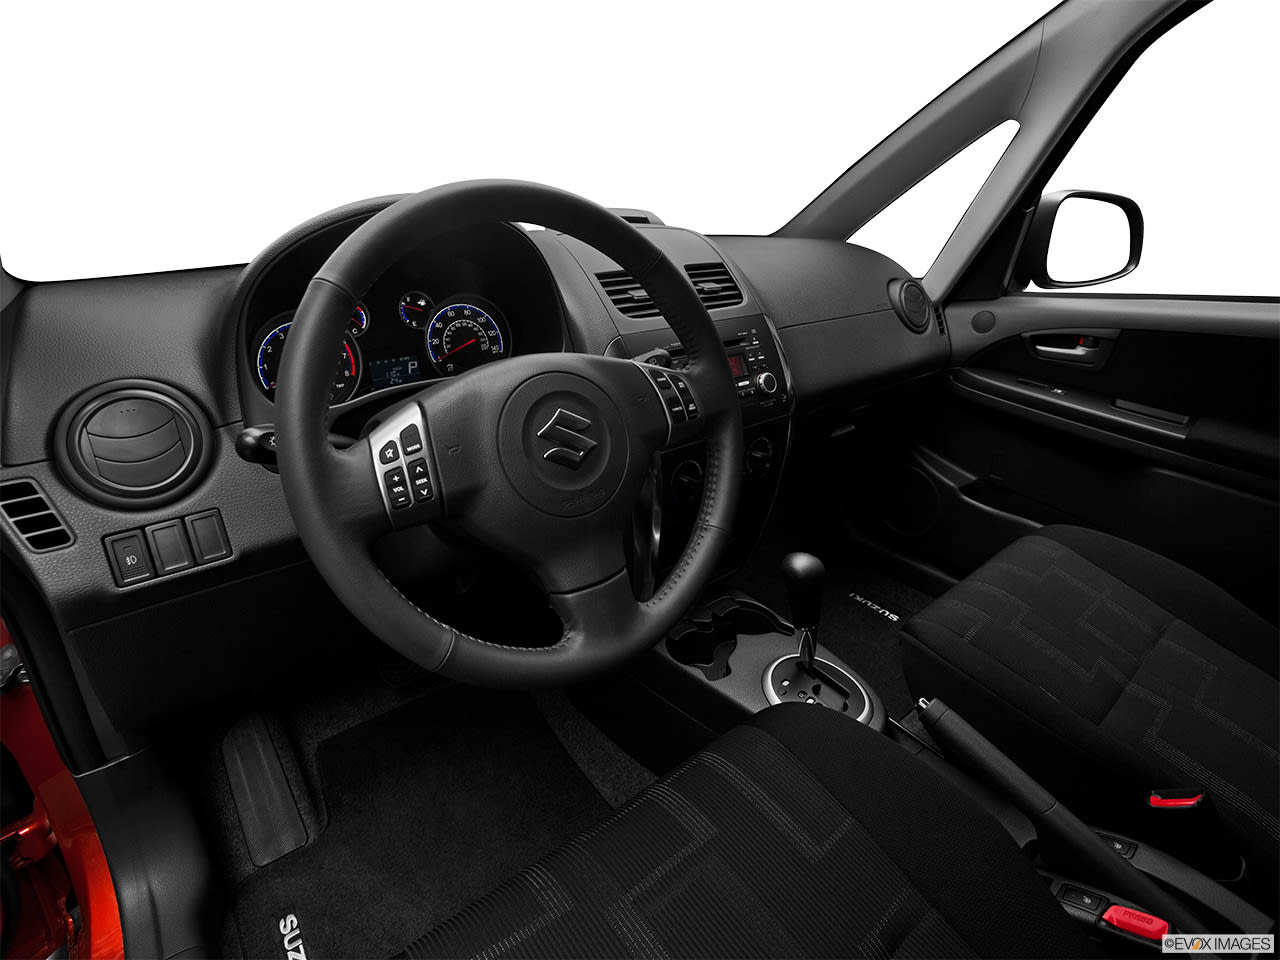 A Buyer's Guide to the 2012 Suzuki SX4 | YourMechanic Advice